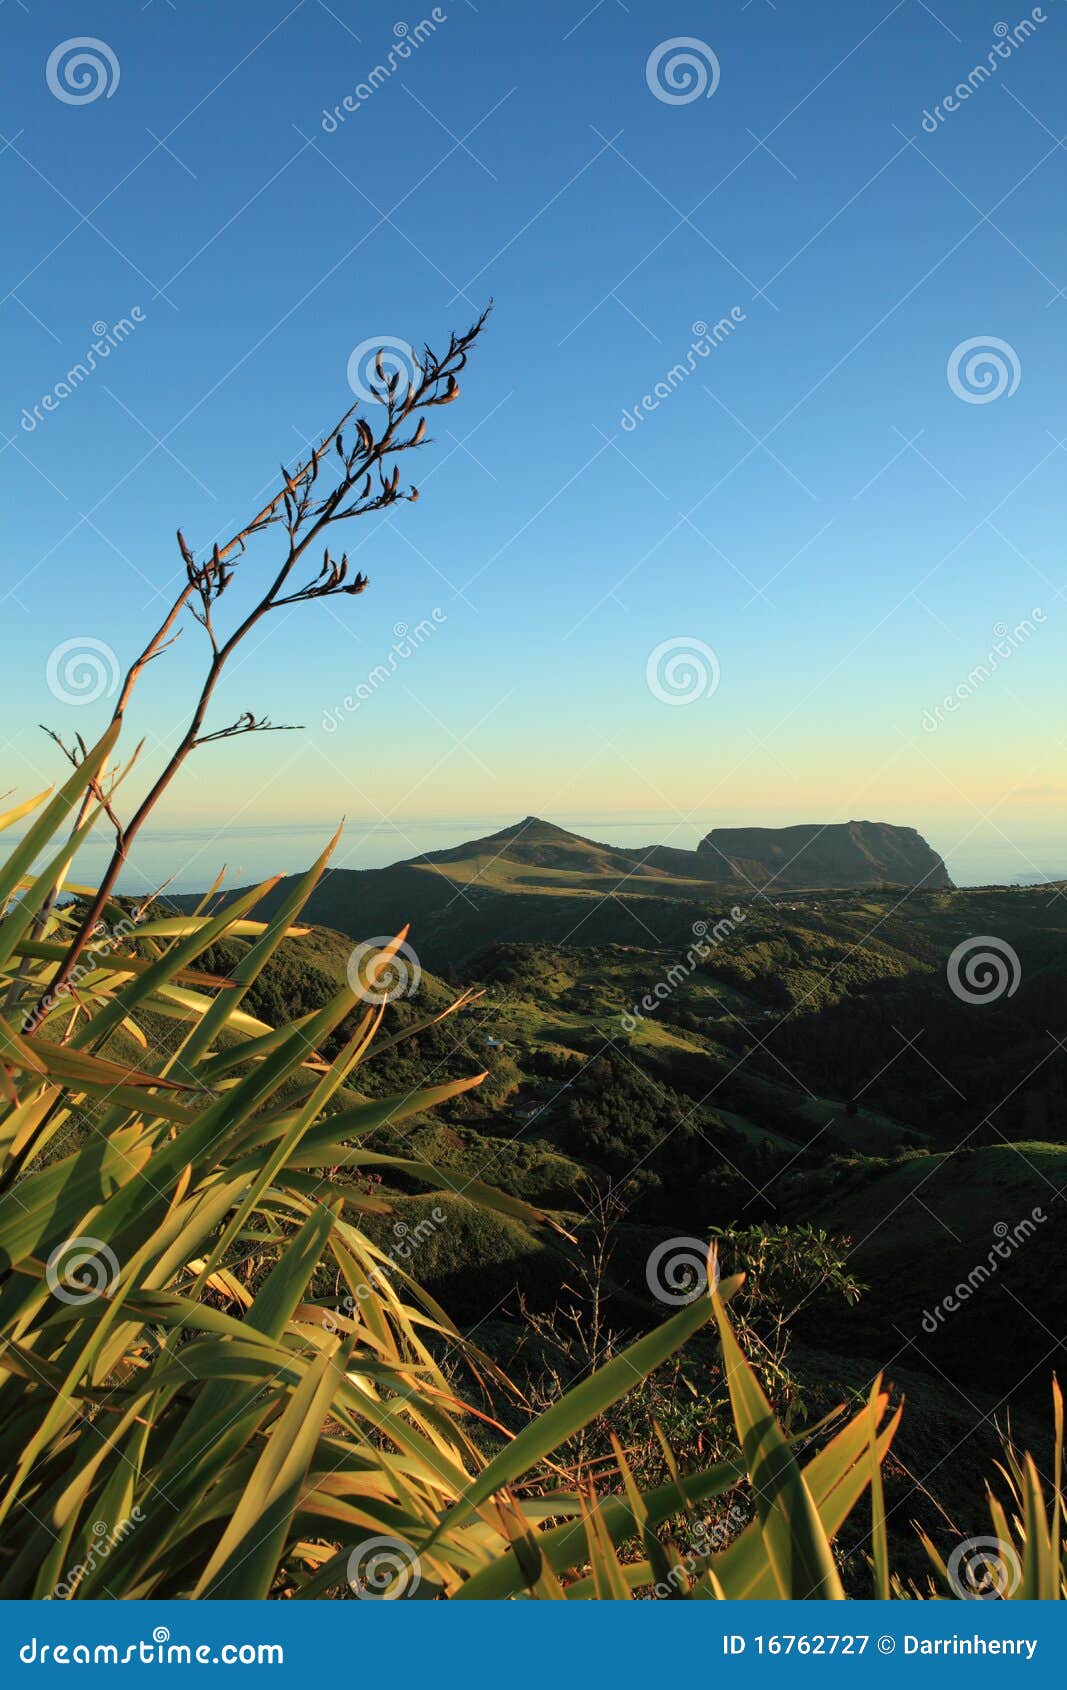 flax plants in dramatic dawn light on st helena